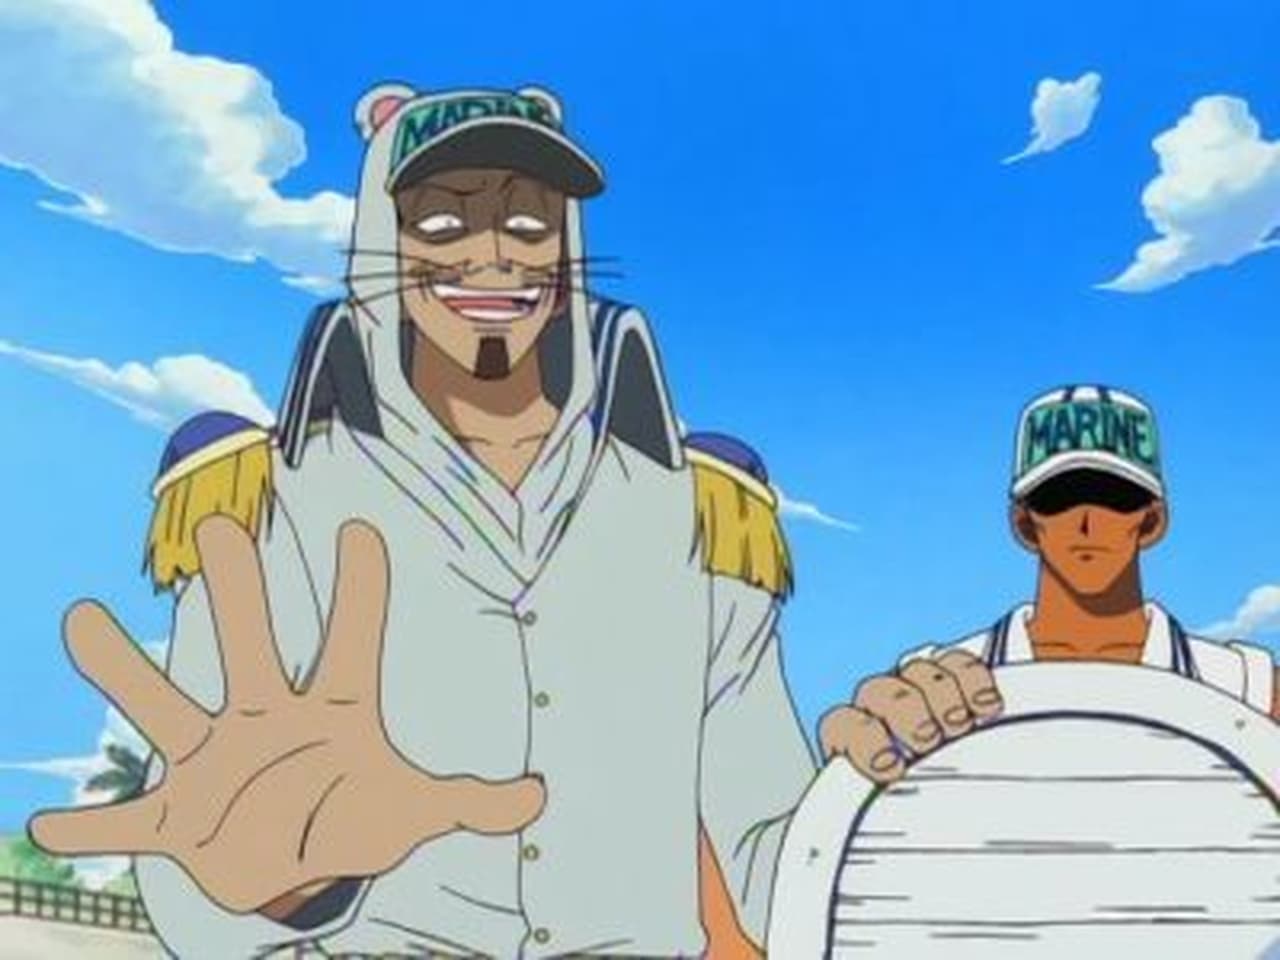 One Piece - Season 1 Episode 31 : The Worst Man in the Eastern Seas! Fishman Pirate Arlong!